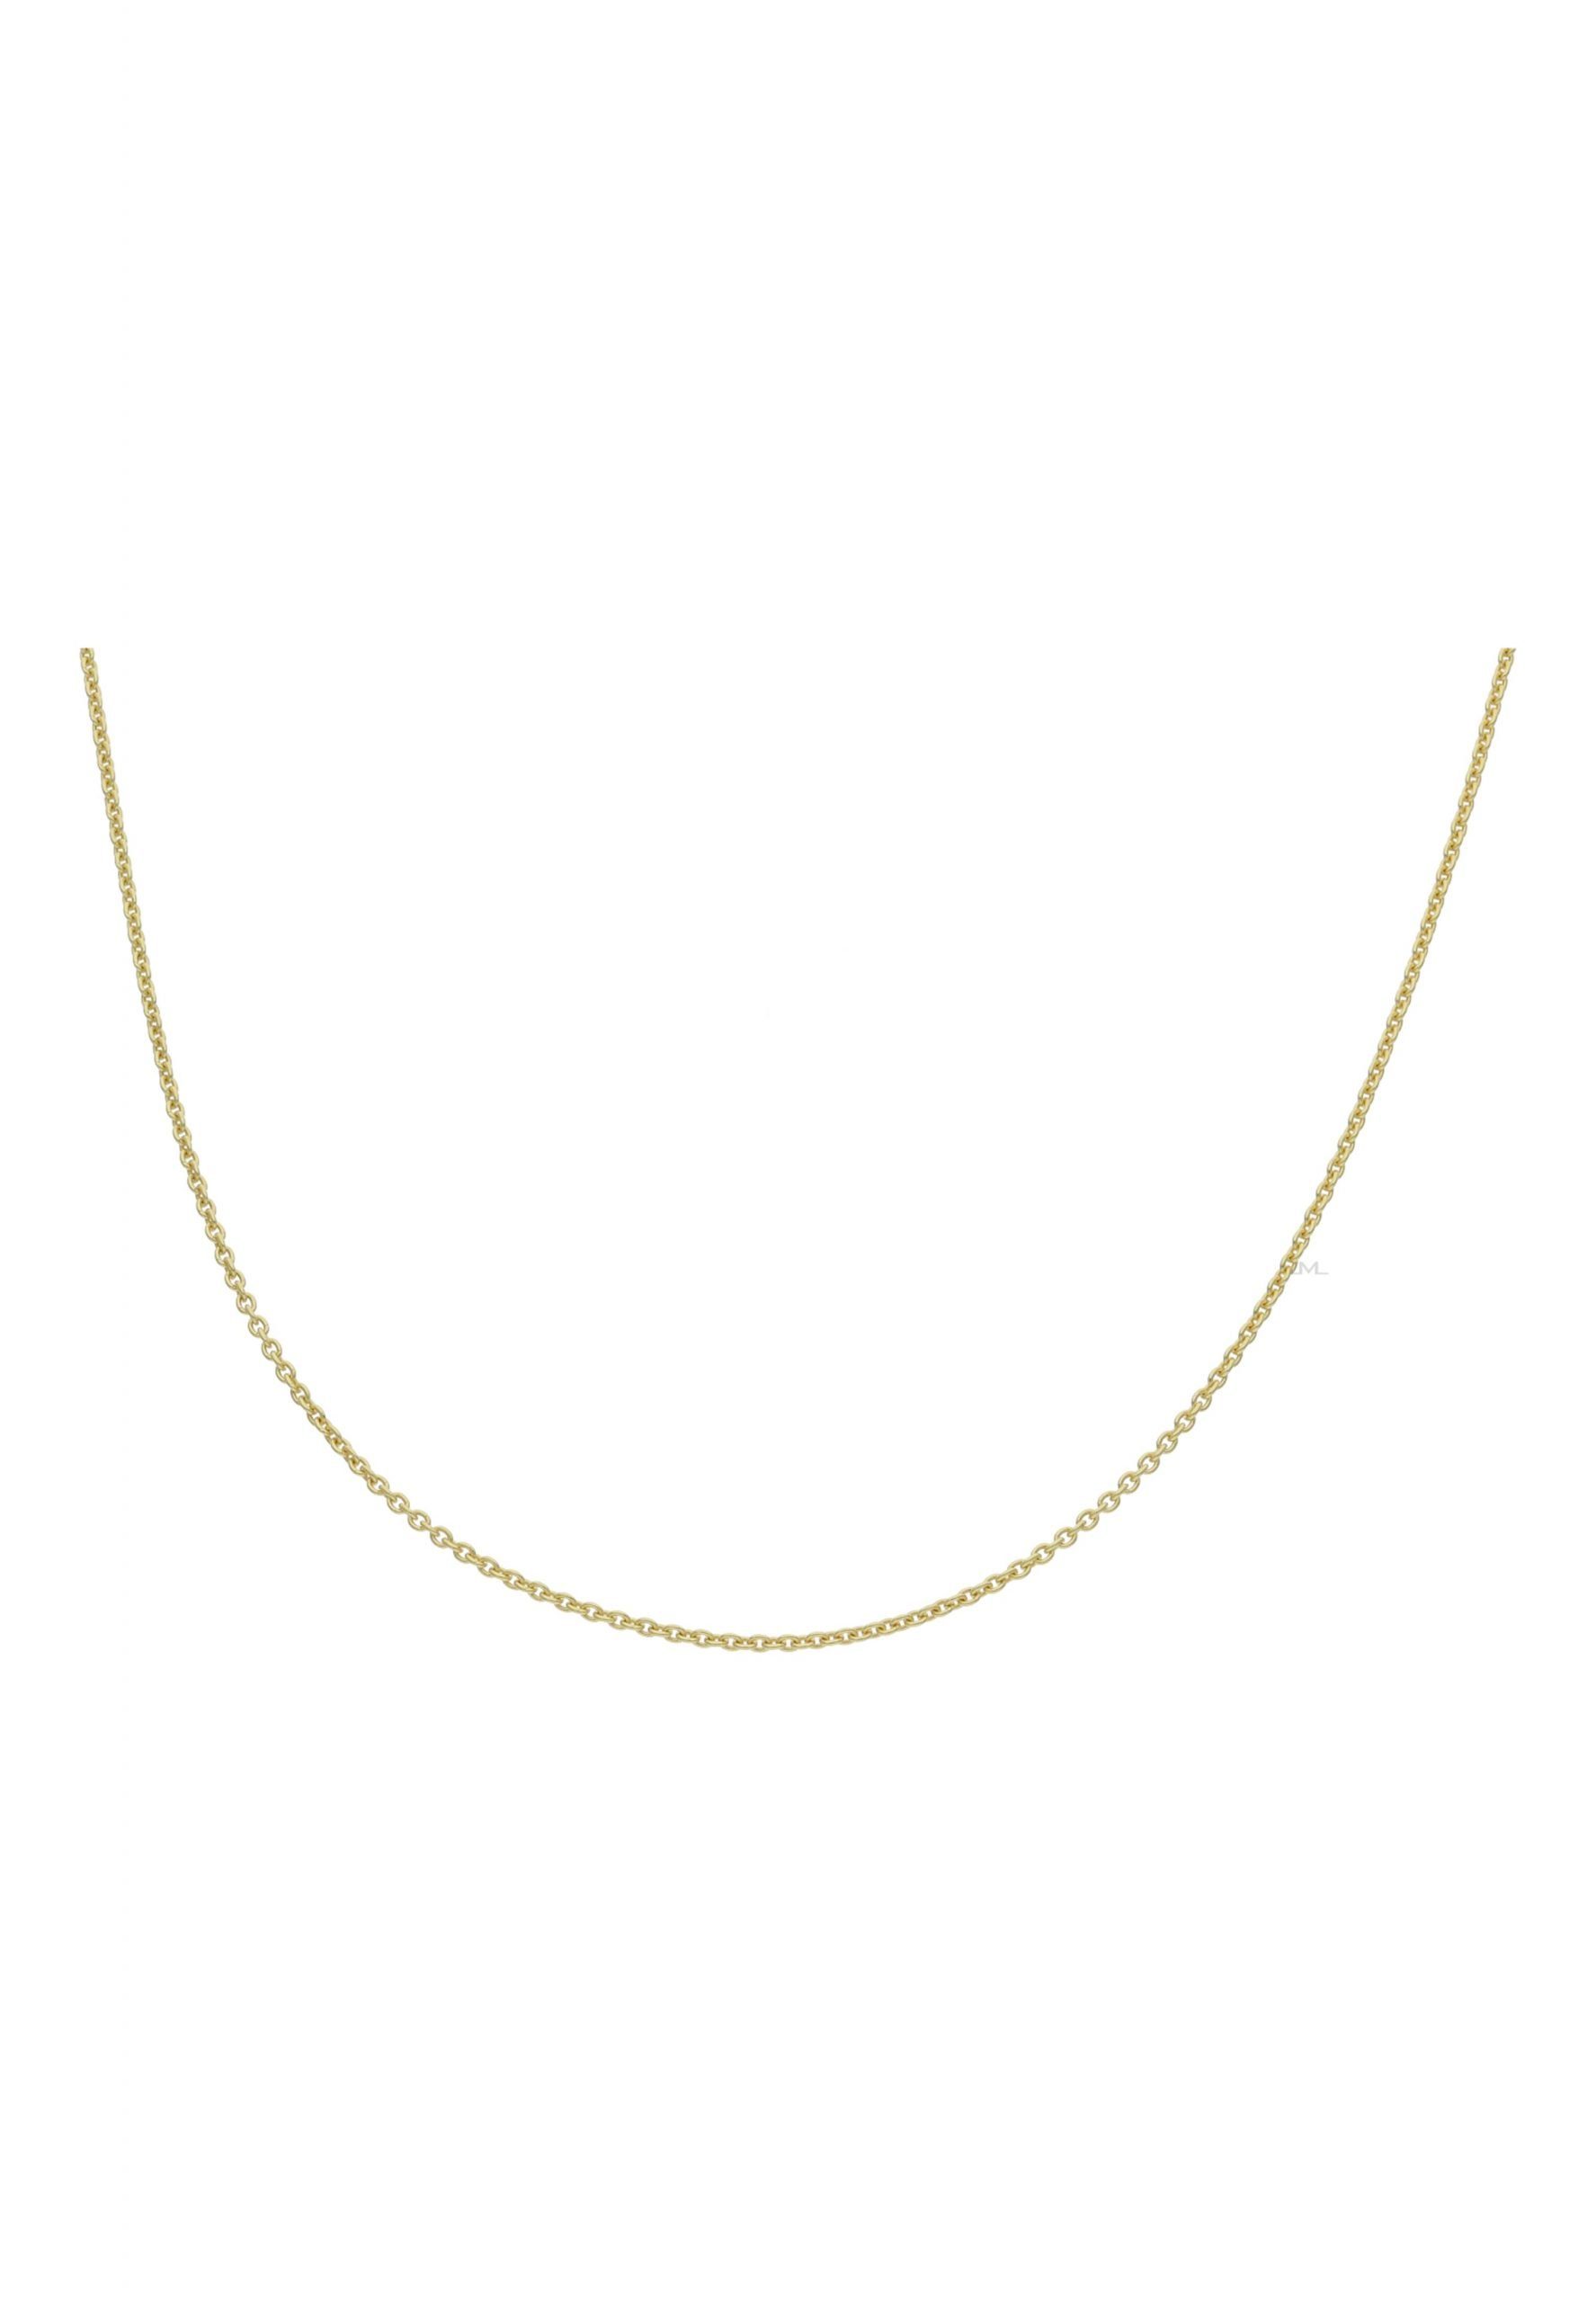 (1-tlg), JuwelmaLux Ankerkette Goldkette Halskette Damen 585/000, Gold Gold Schmuckschachtel Goldkette inkl.